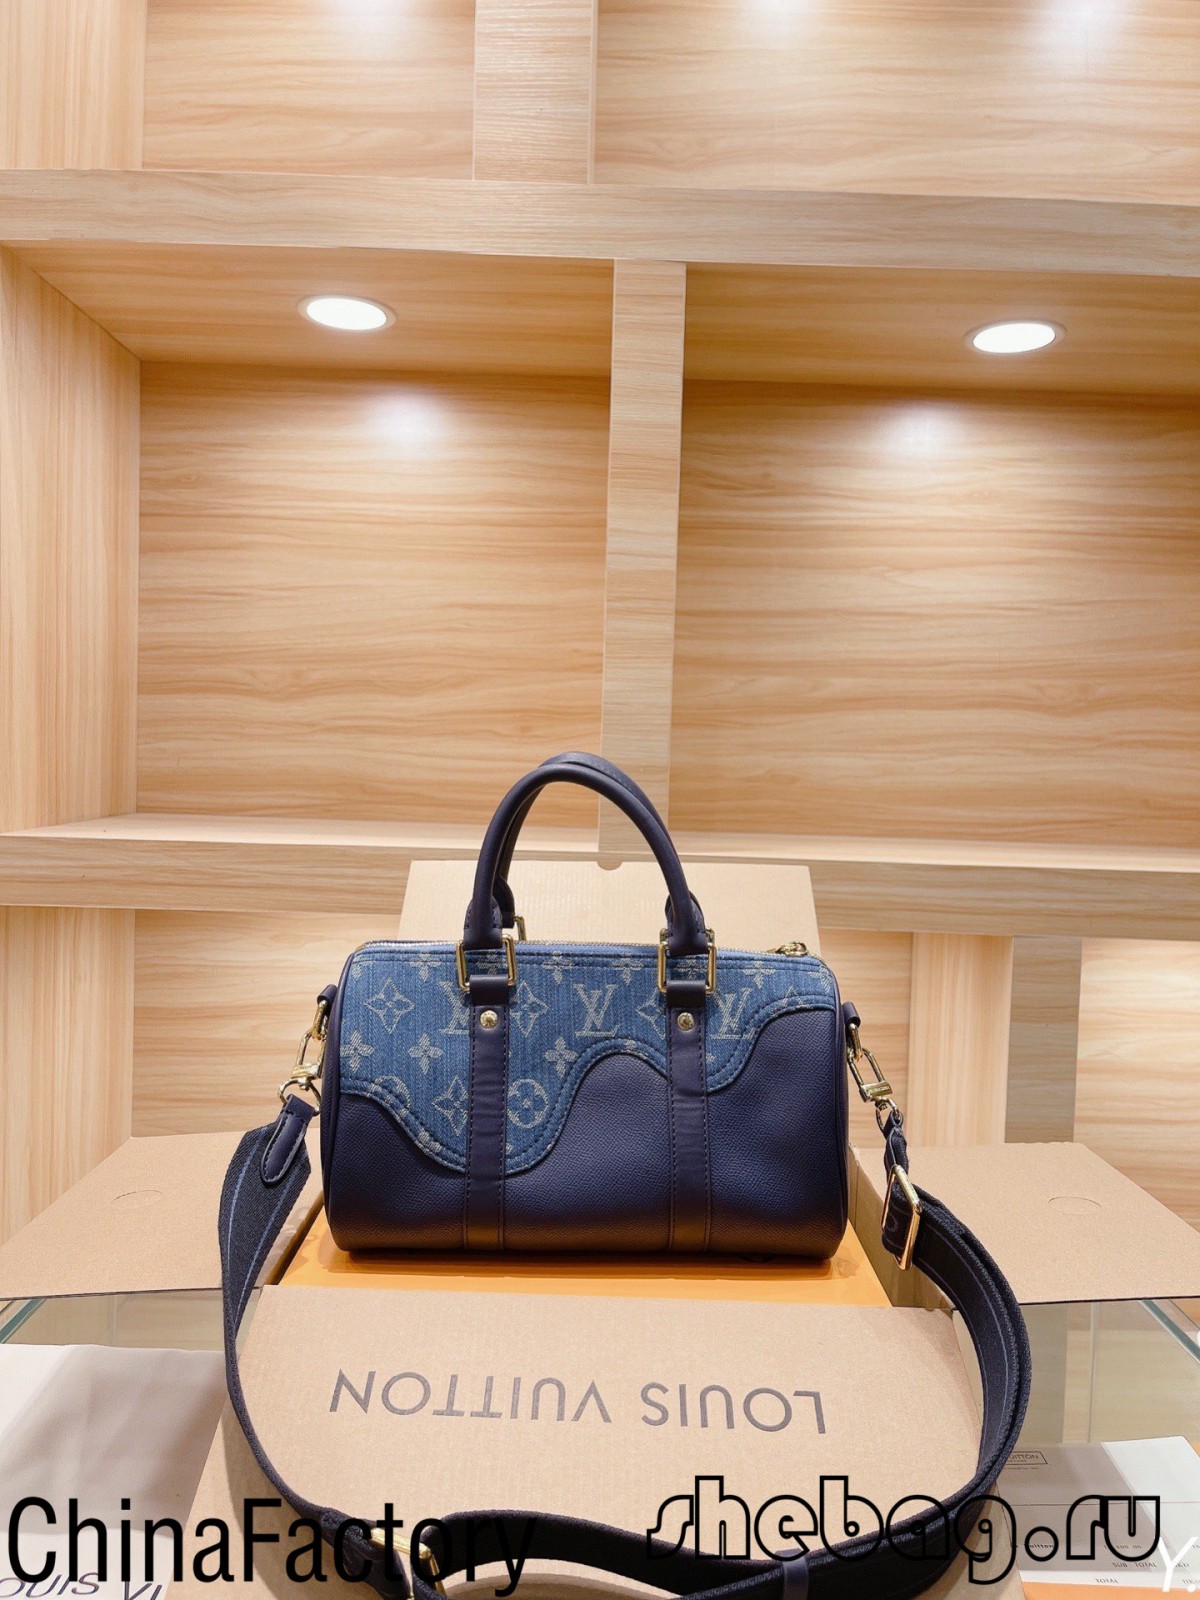 د آا لوئس ویټون ډفل کڅوړه نقل: LV x نیګو (2022 ترټولو ګرم)-Best Quality Fake Louis Vuitton Bag Online Store, Replica designer bag ru